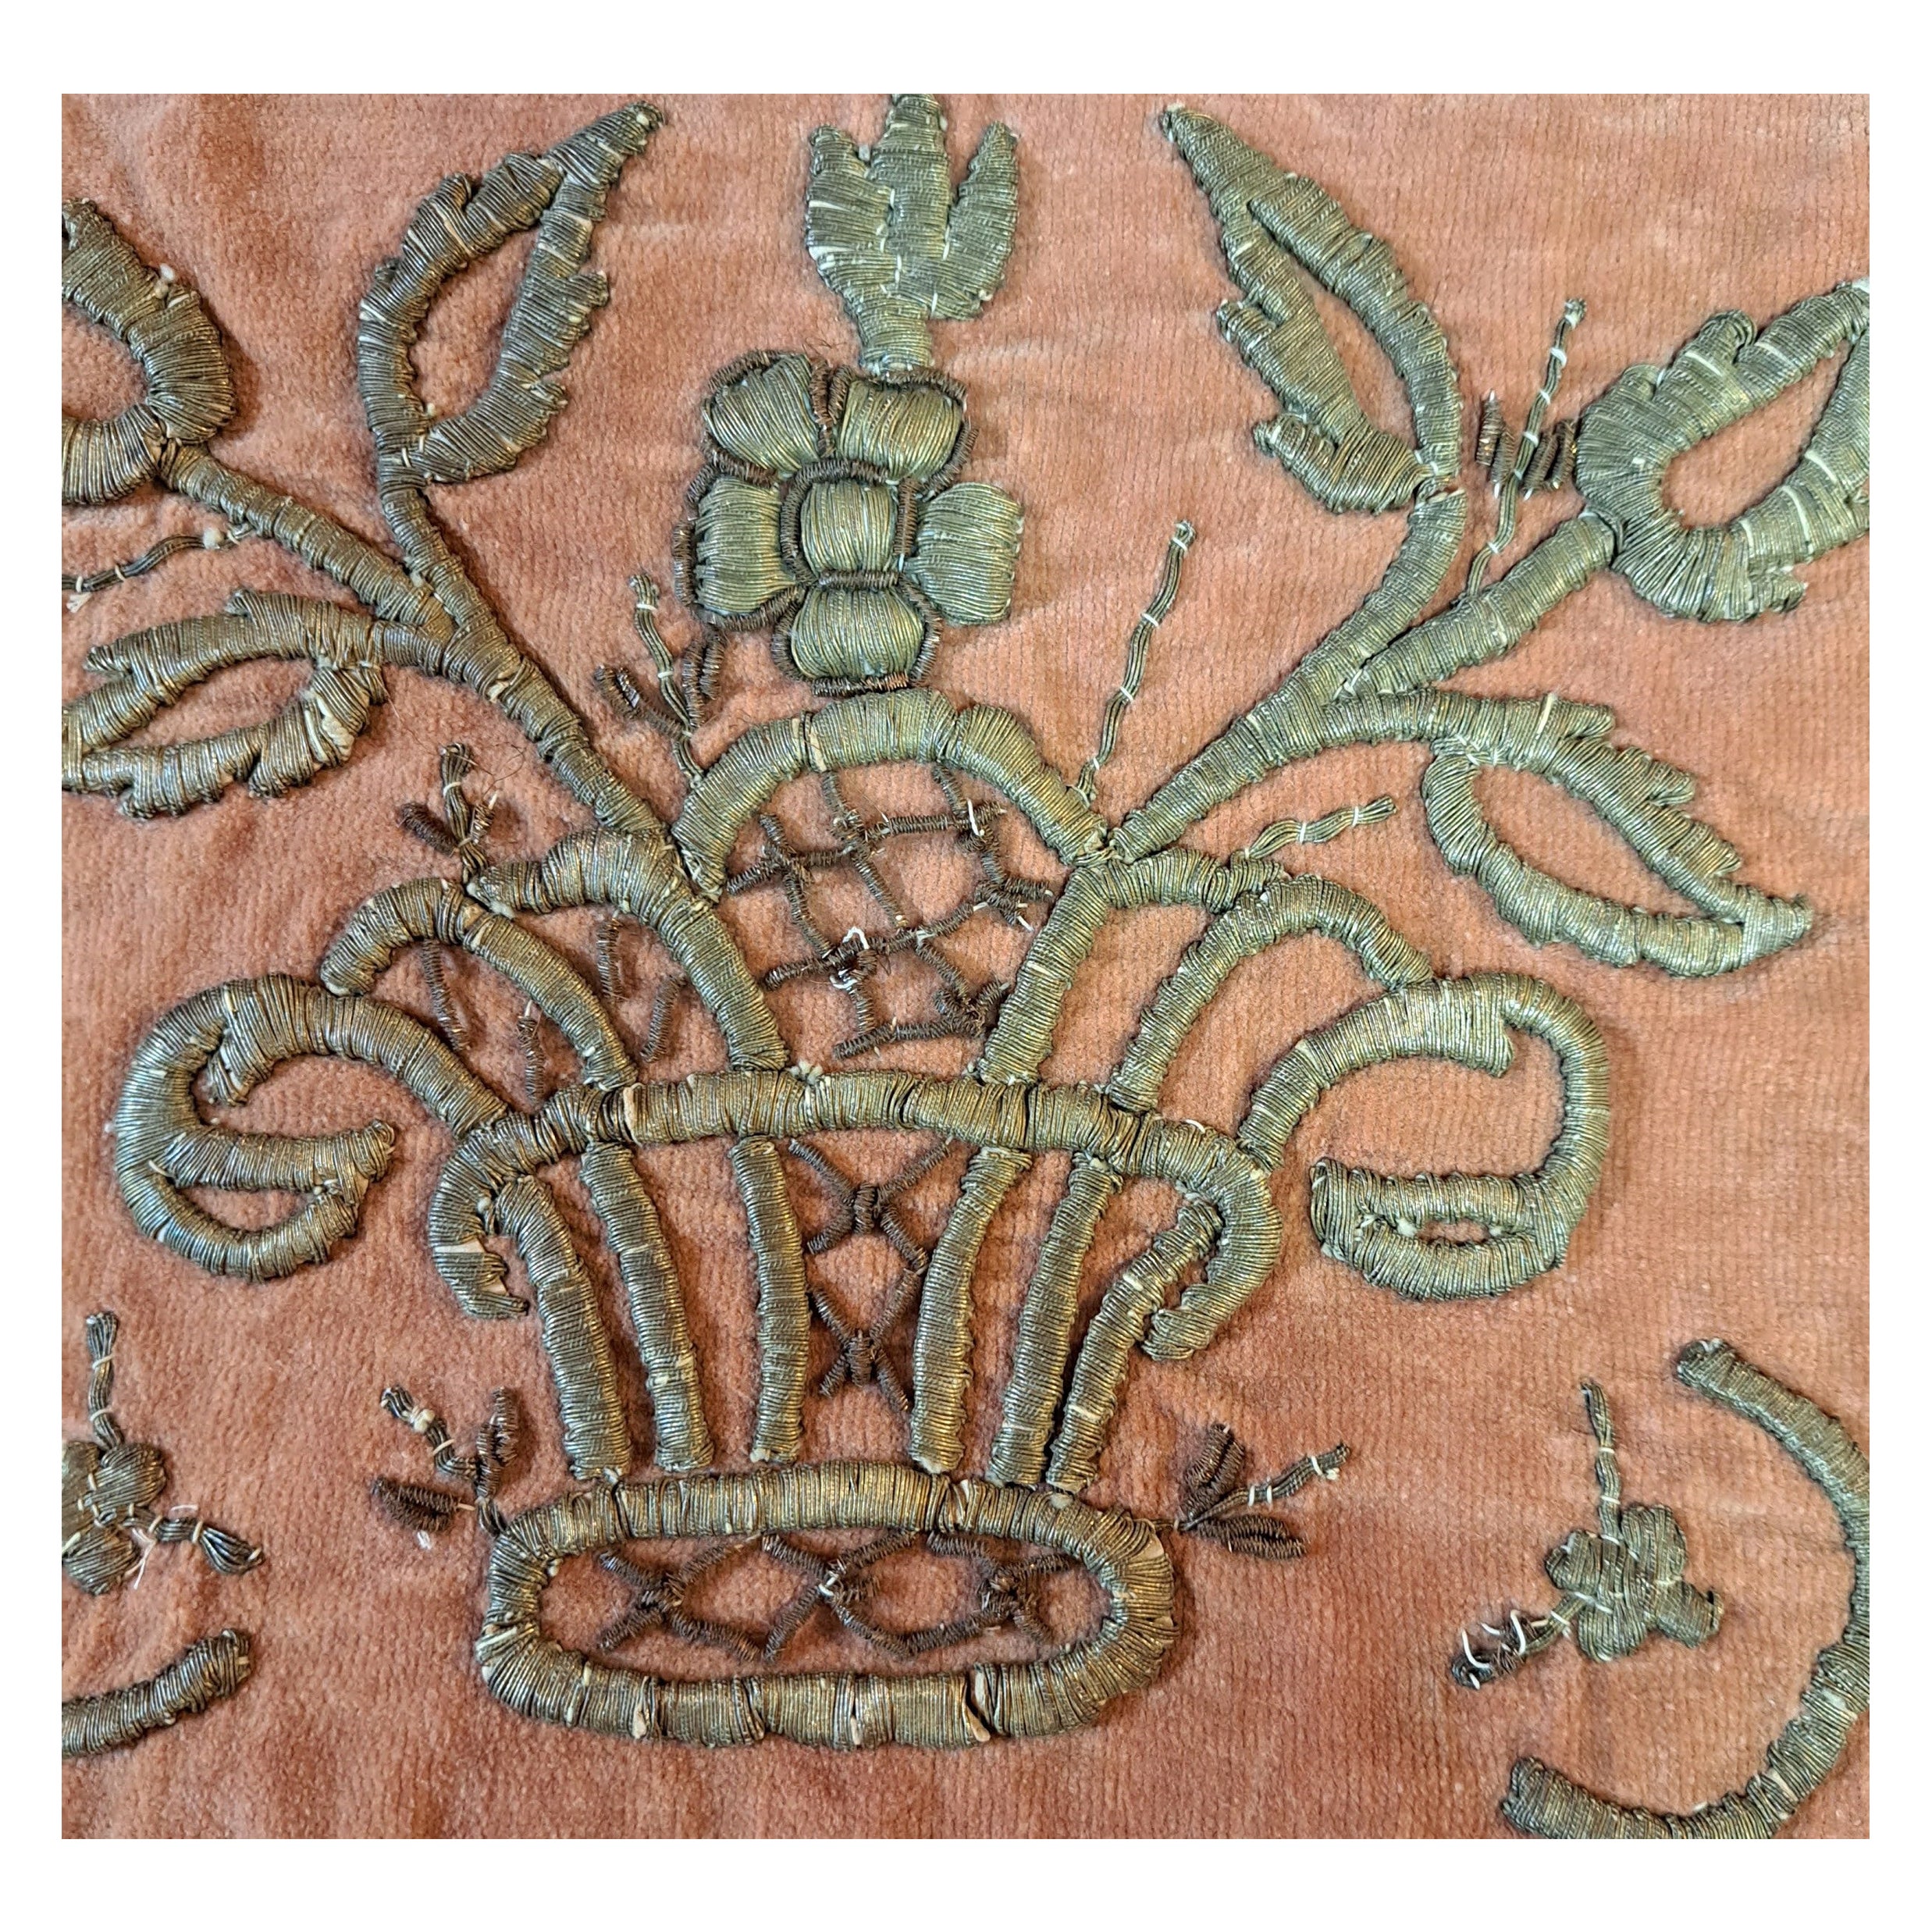 Ottoman Velvet Embroidered Panel For Sale